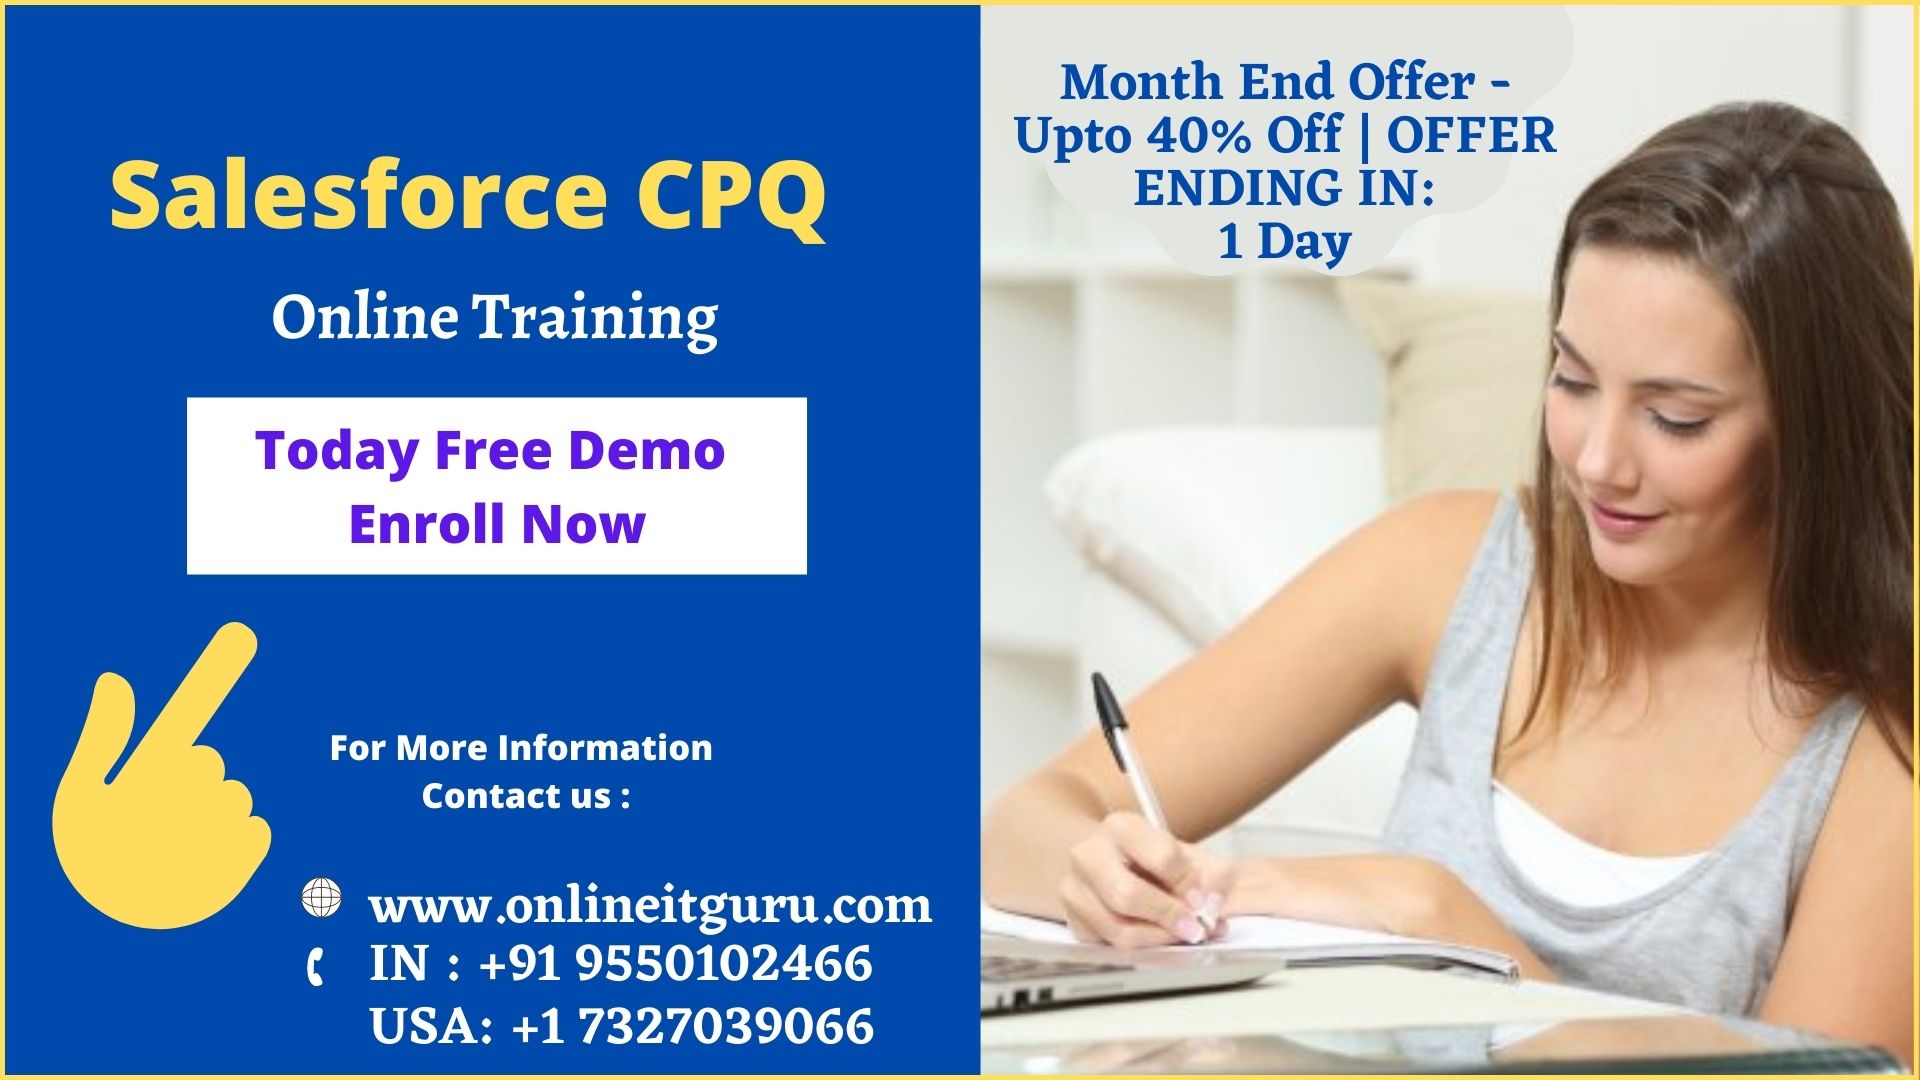 Salesforce CPQ Online Training | Salesforce CPQ Training, Online Event